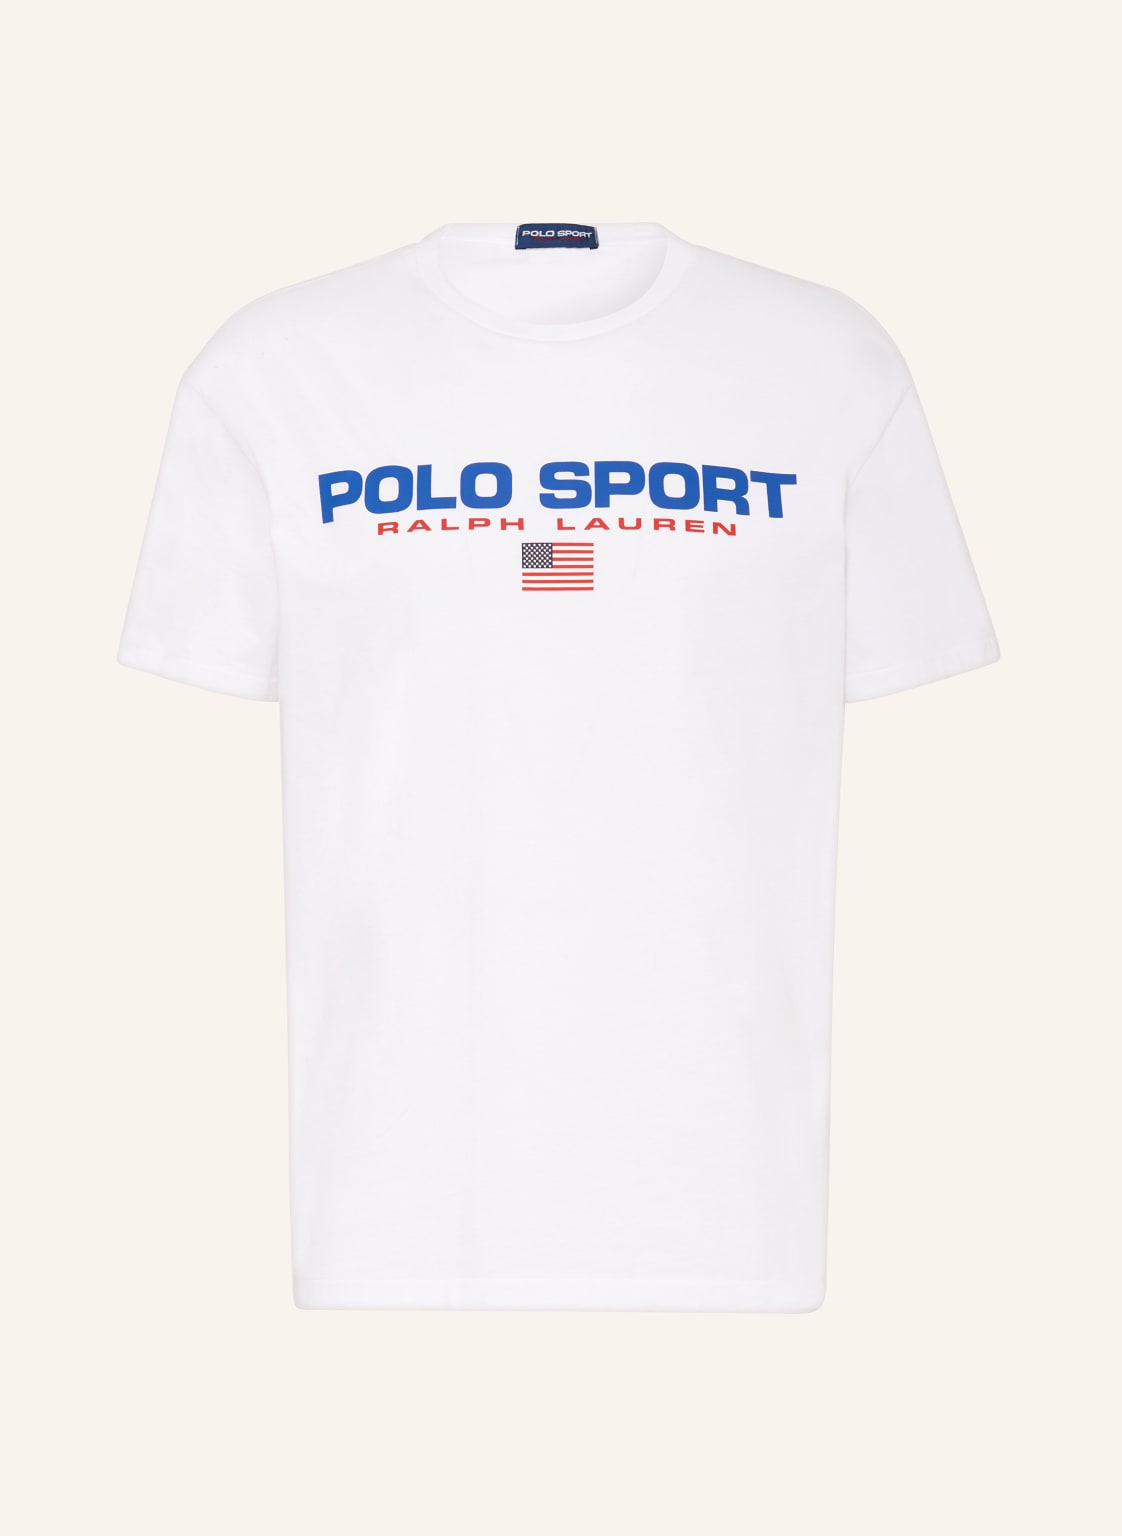 Polo Sport T-Shirt weiss von POLO SPORT